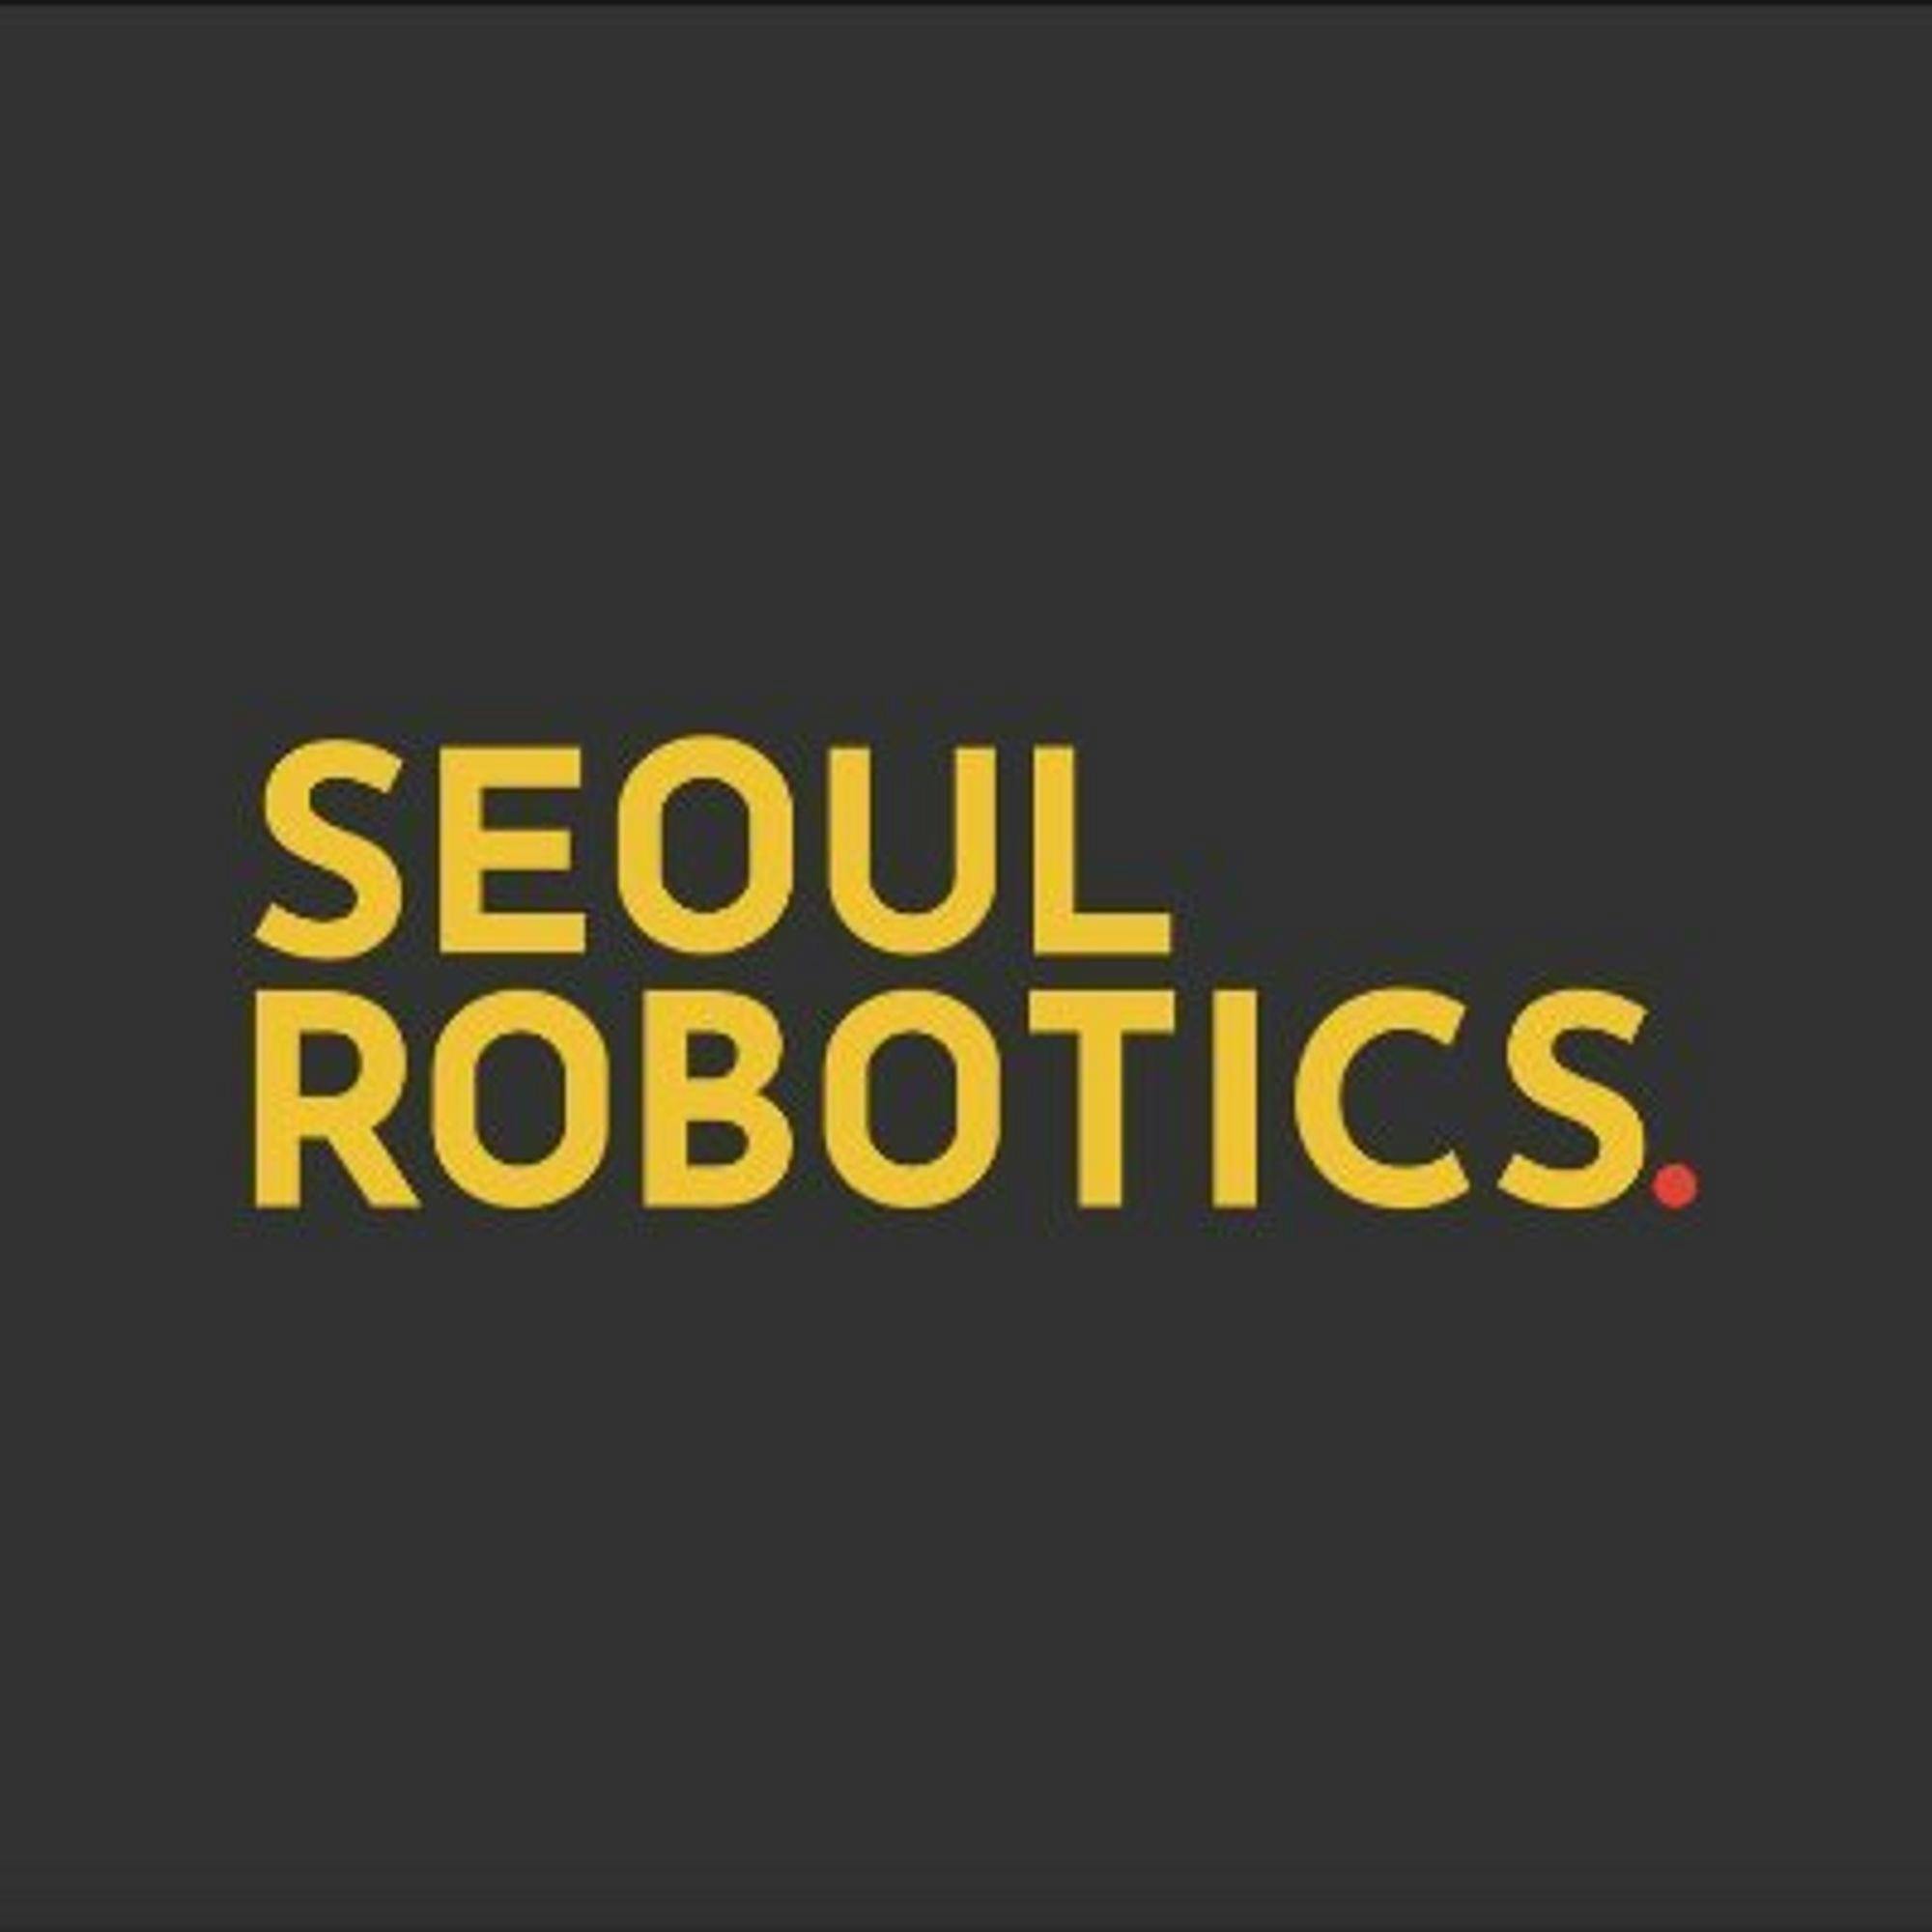 My first month at Seoul Robotics